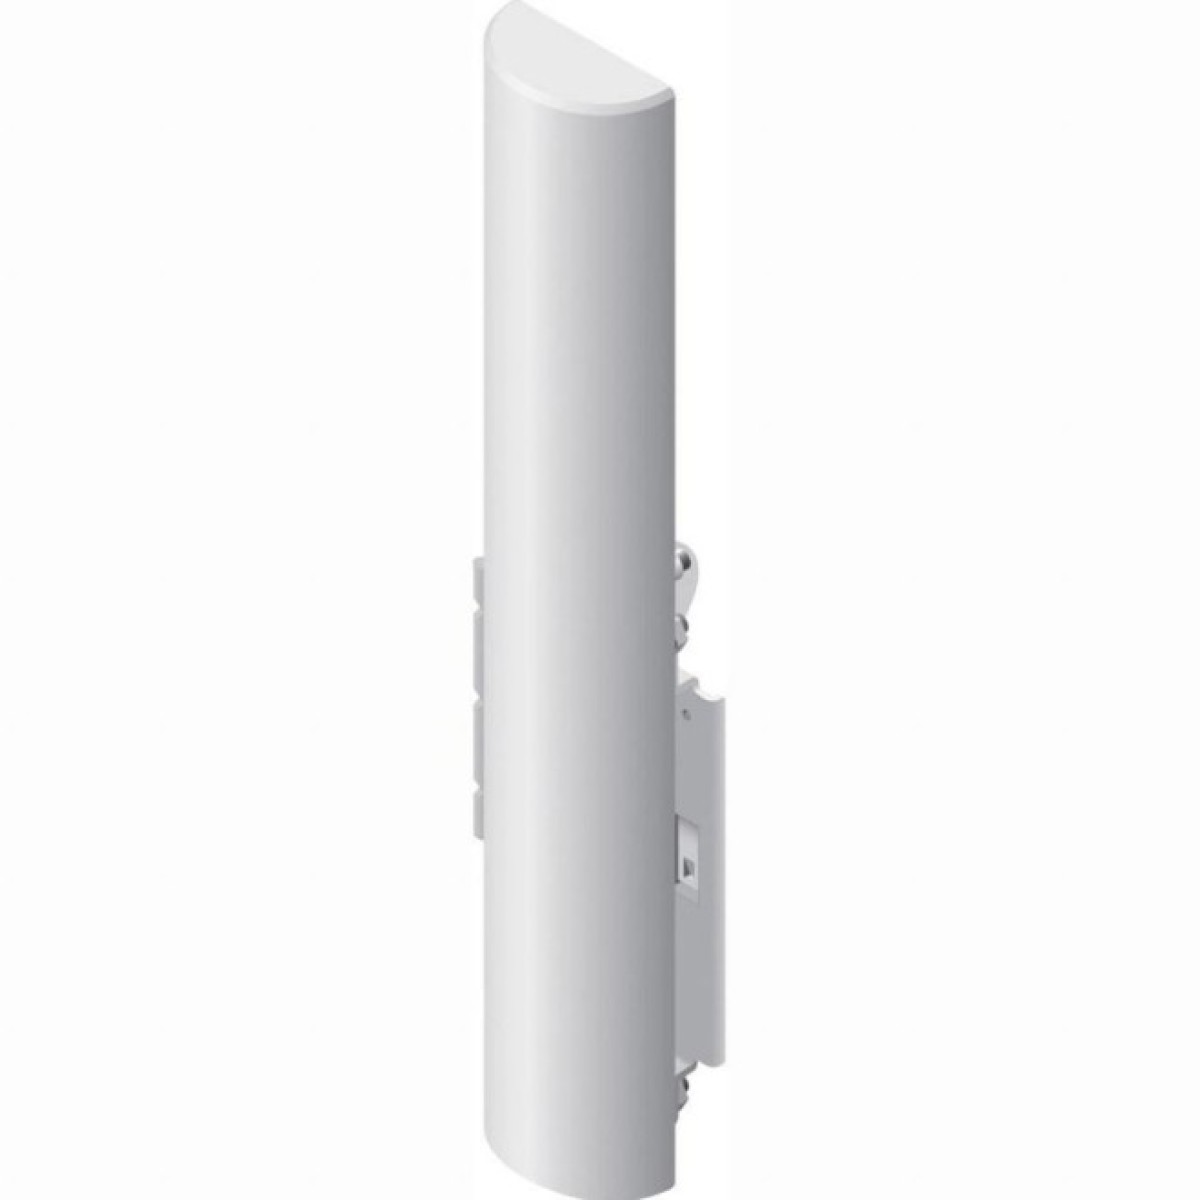 Антена Ubiquiti sector antenna AirMax MIMO 16dBi 5GHz, 120°, rocket kit (AM-5G16-120) 256_256.jpg